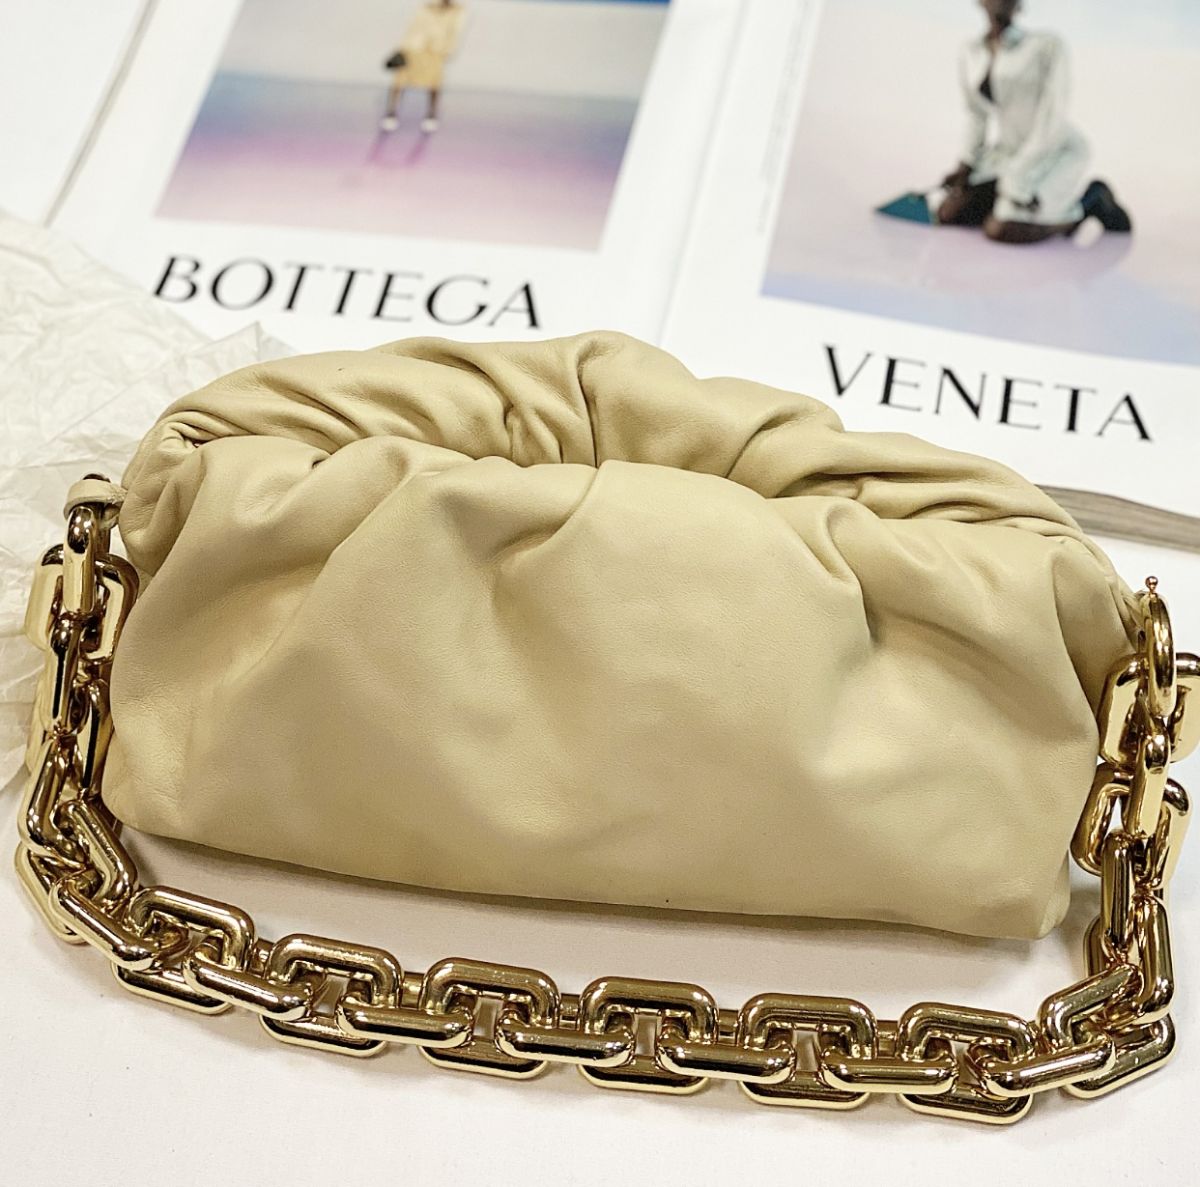 Сумка Bottega Veneta размер 30/17 цена 76 925 руб 